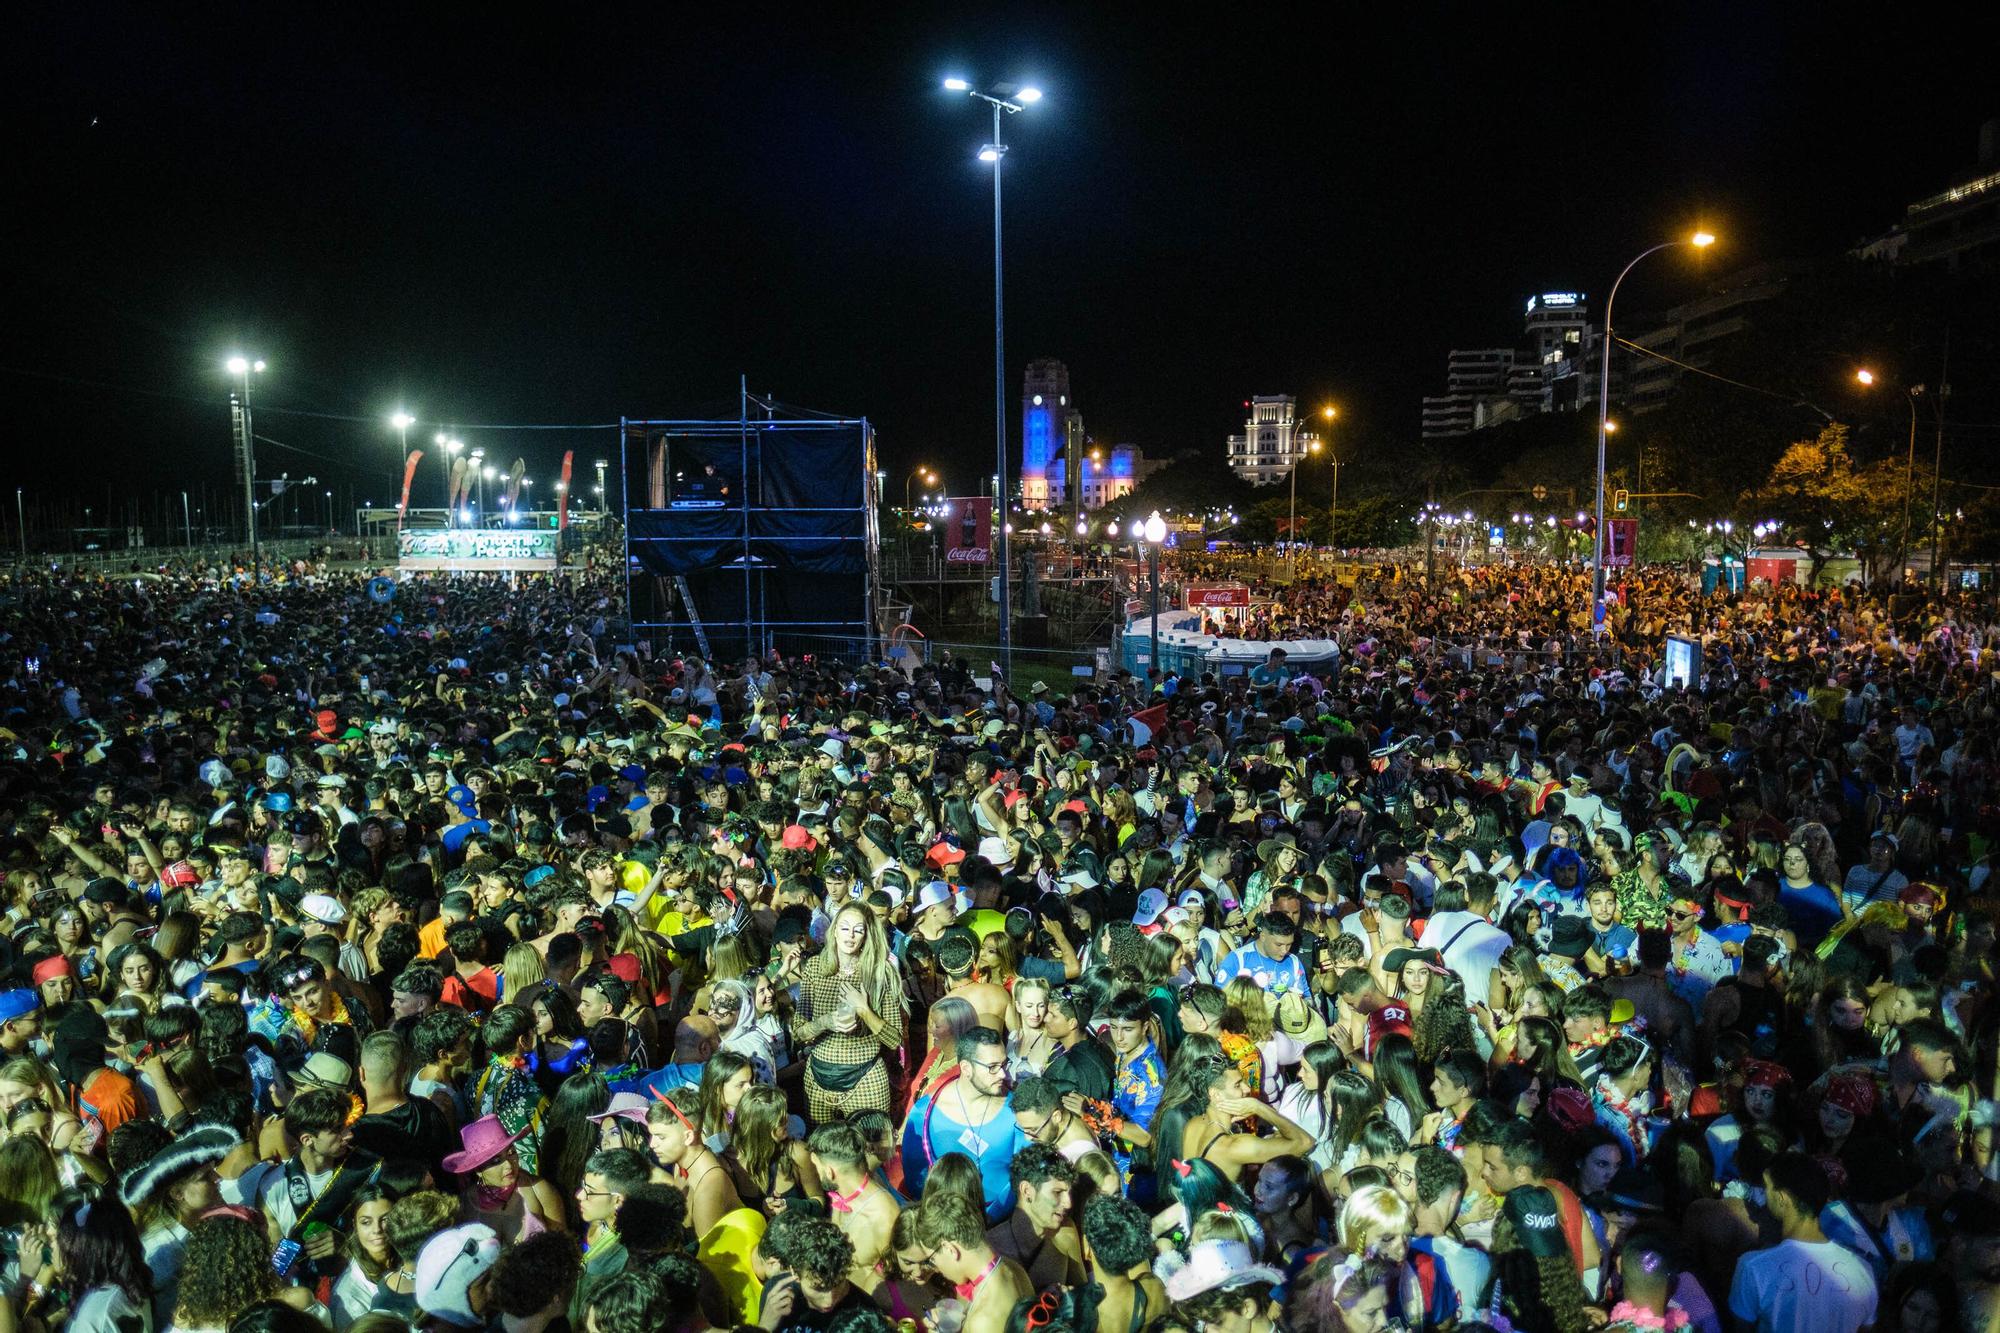 La gran noche del Carnaval de Santa Cruz de Tenerife